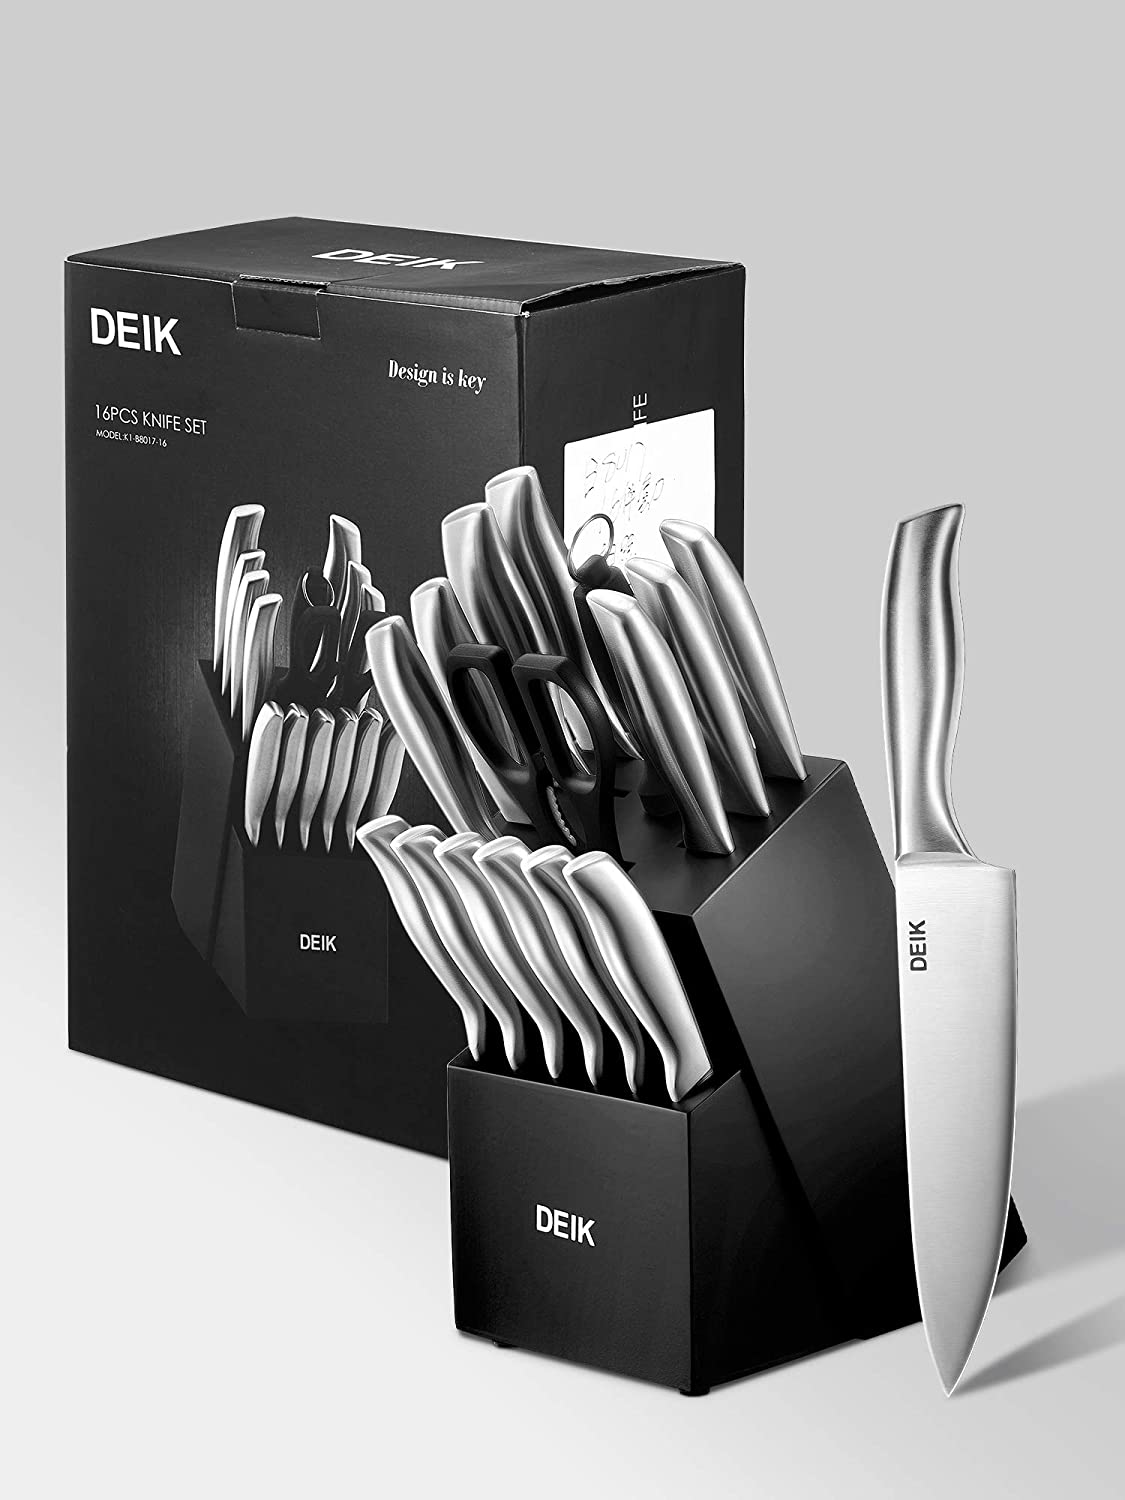 Deik Knife Set, 16-Piece Kitchen Knife Set with Wood Block, Manual Sharpening for Chef Knife Set, Stainless Steel Hollow Handle Block Set